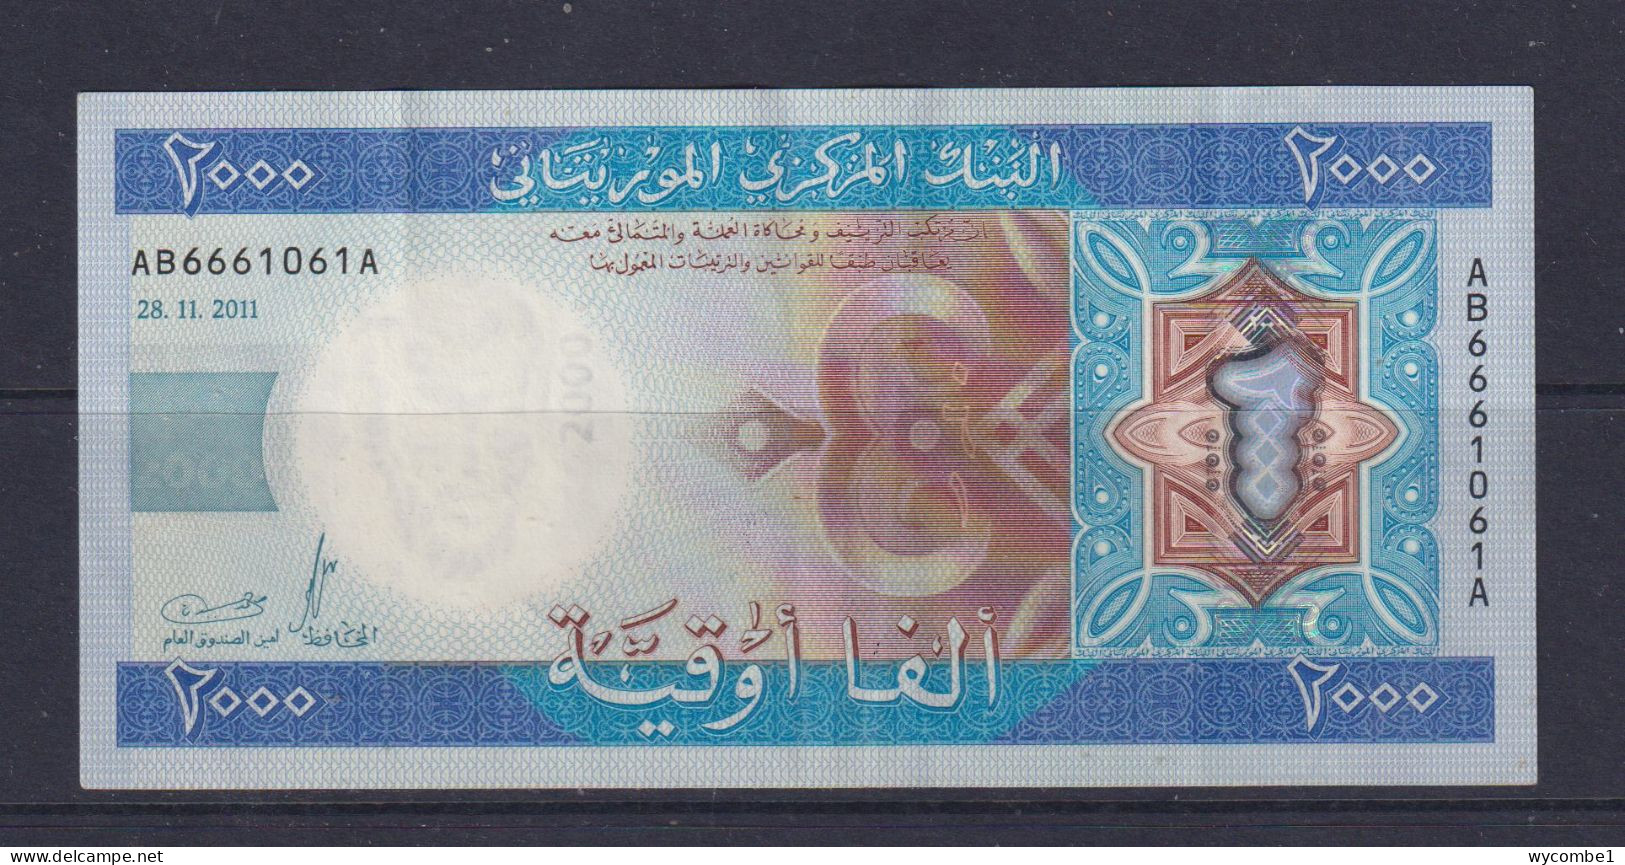 MAURITANIA - 2011 2000 Ouguiya Circulated Banknote - Mauritanie